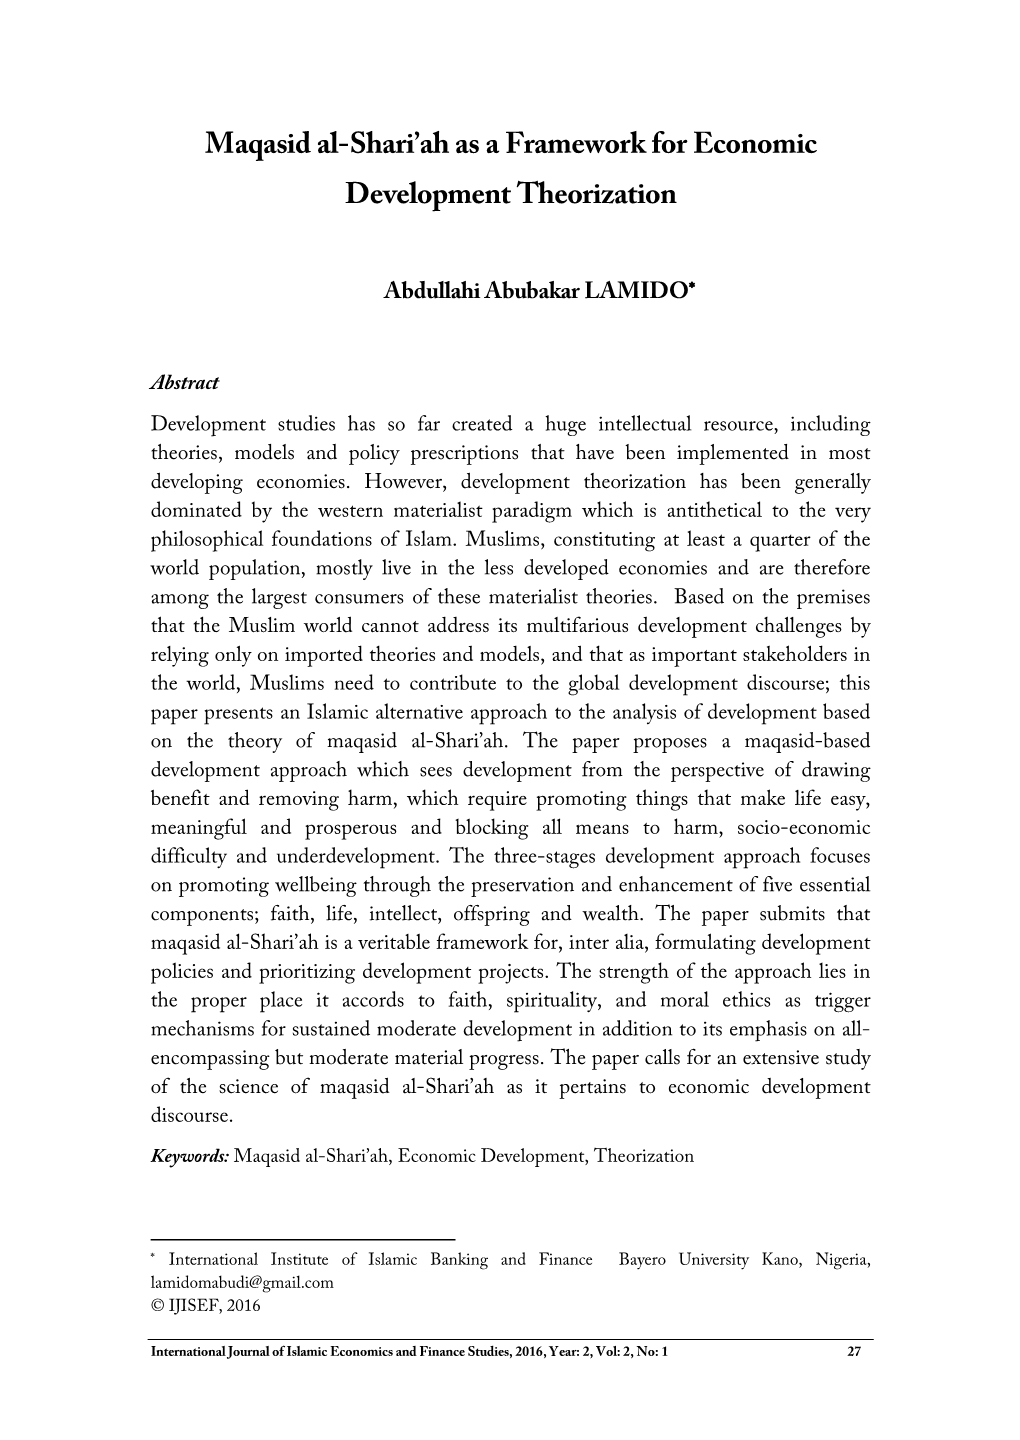 Maqasid Al-Shari'ah As a Framework for Economic Development